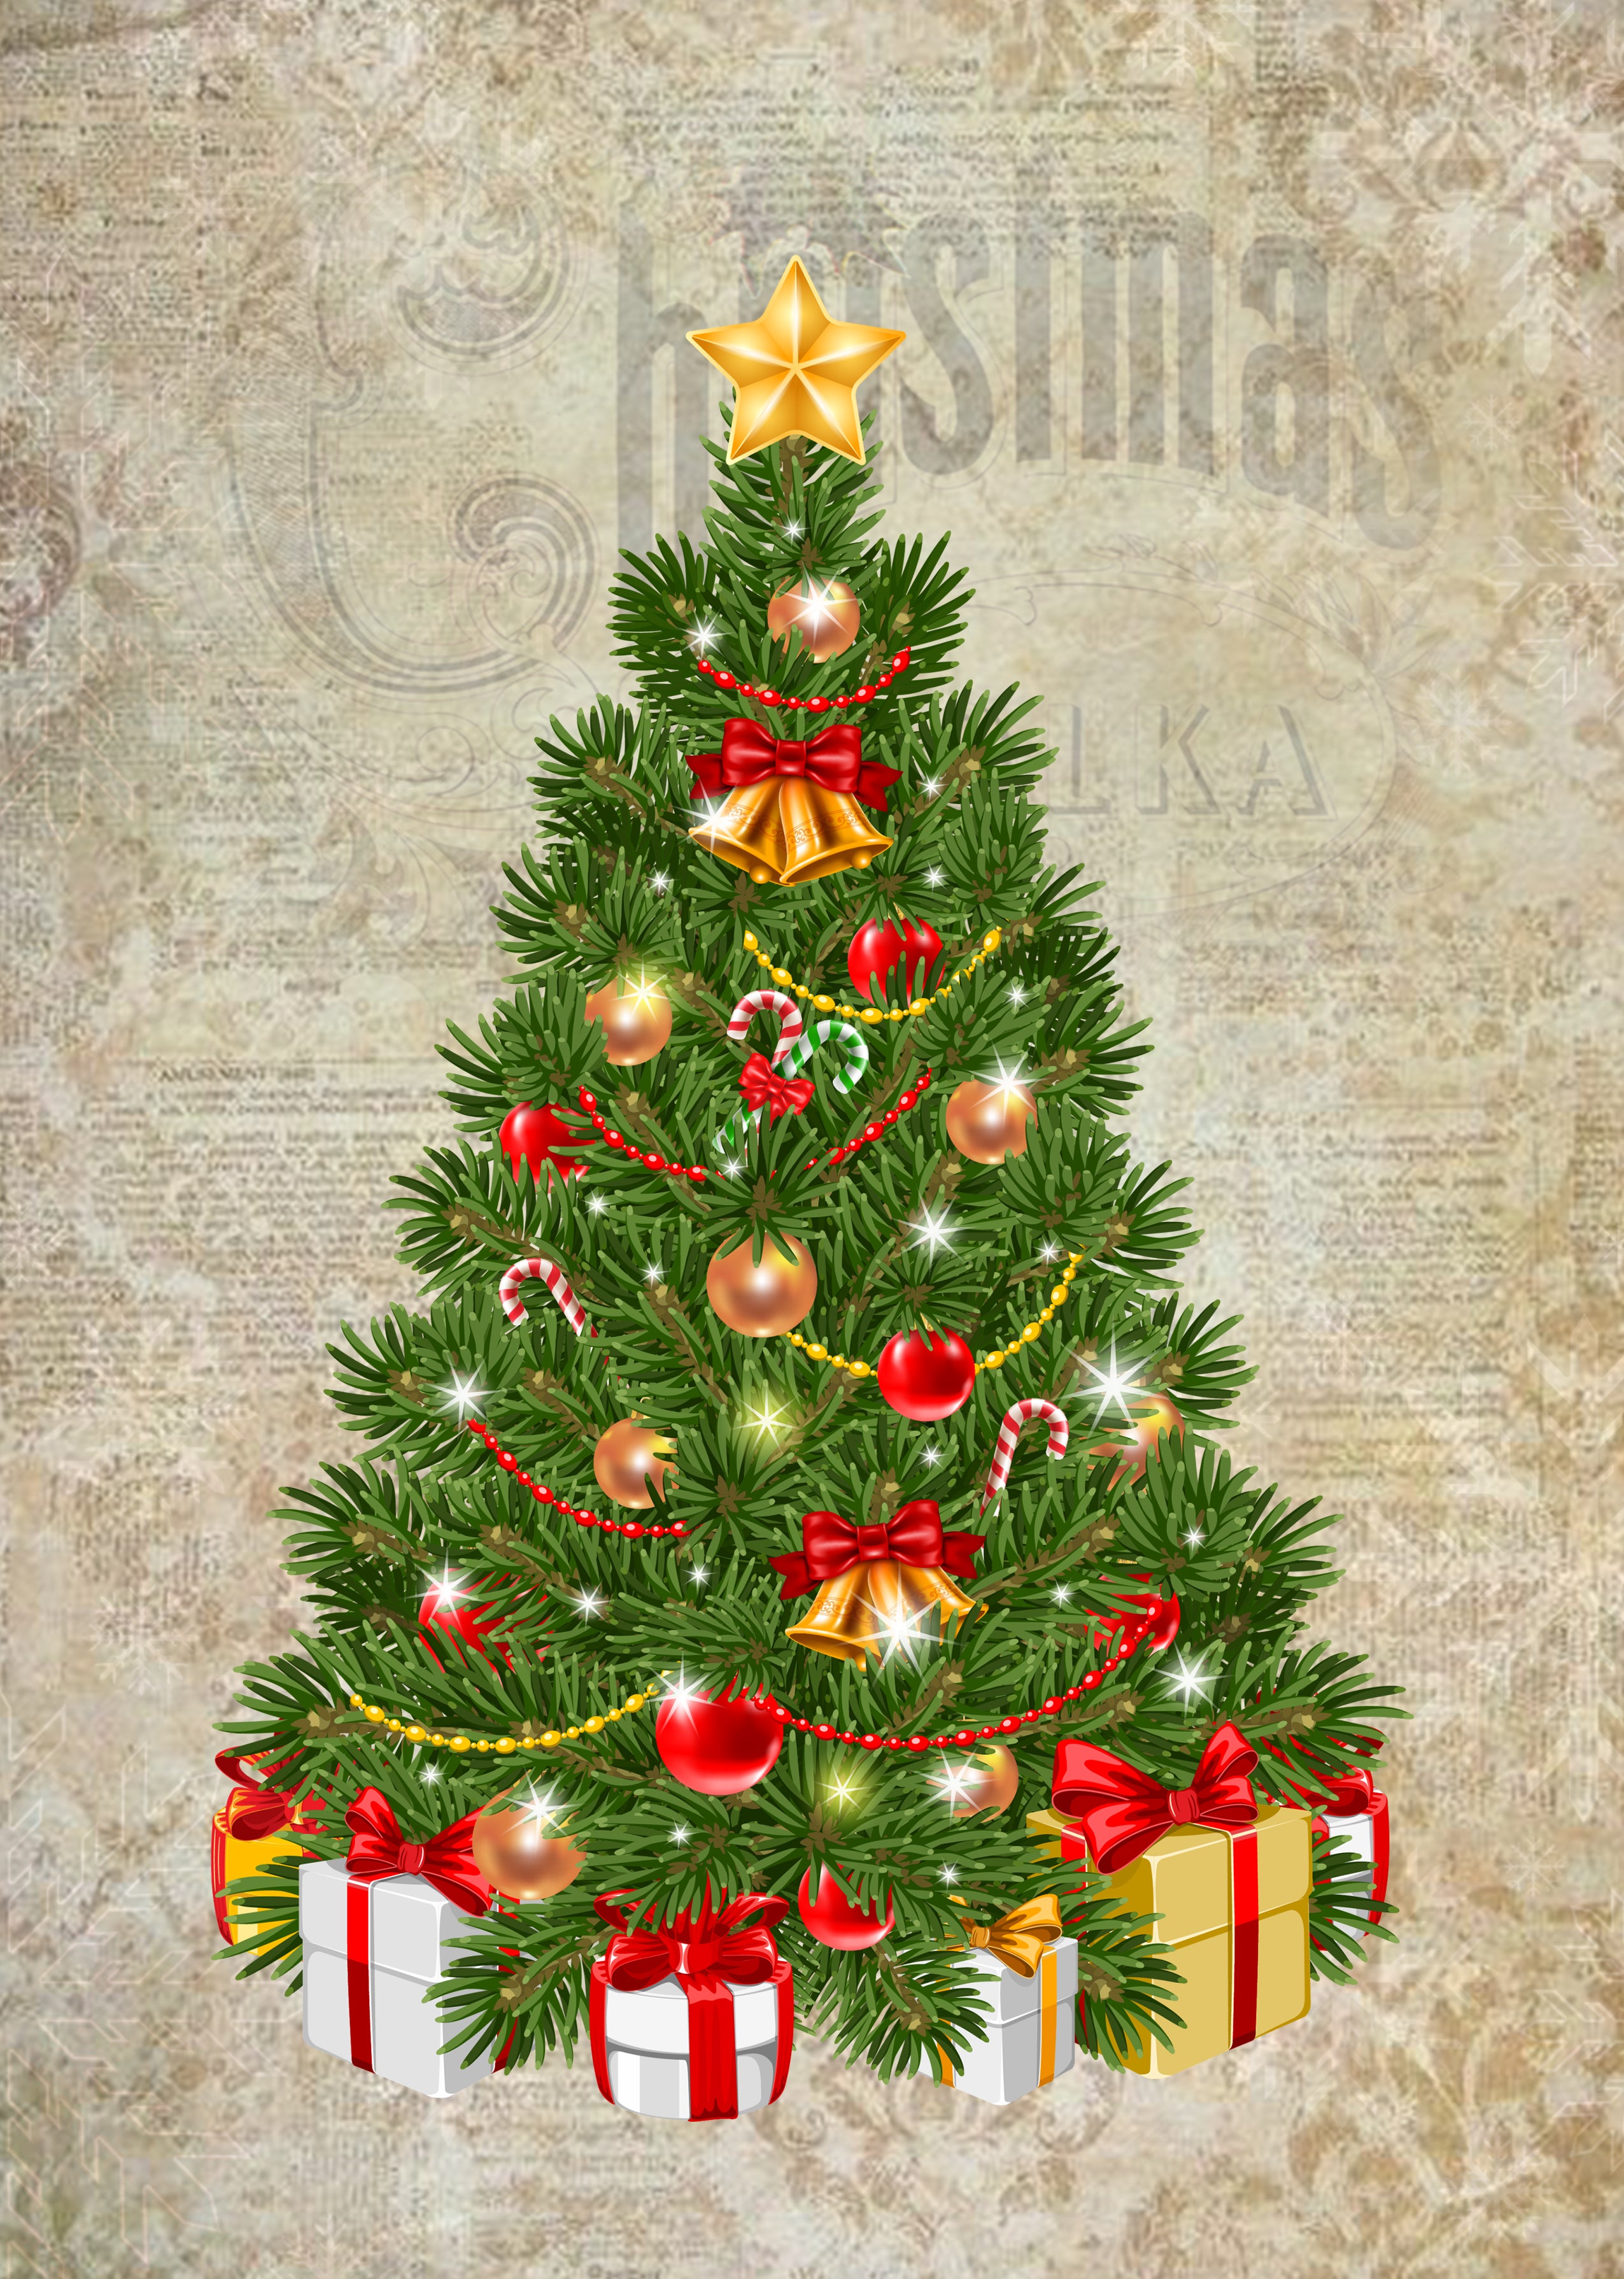 Decoupage Paper Joyful Christmas A4 2 Designs 4Sheets